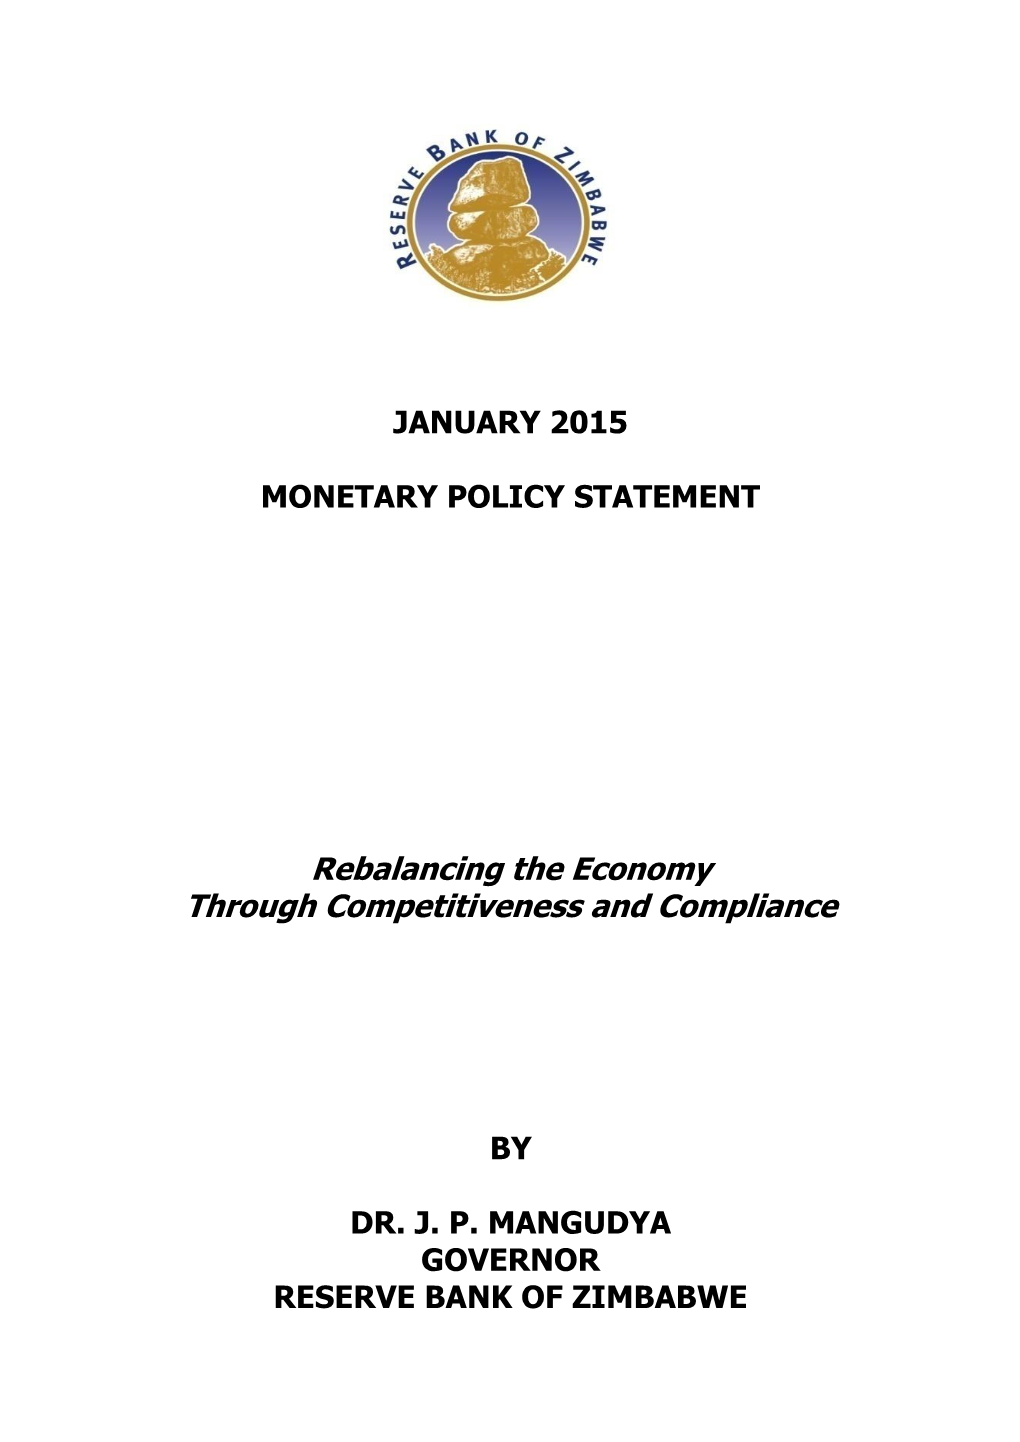 Download January 2015 Monetary Policy